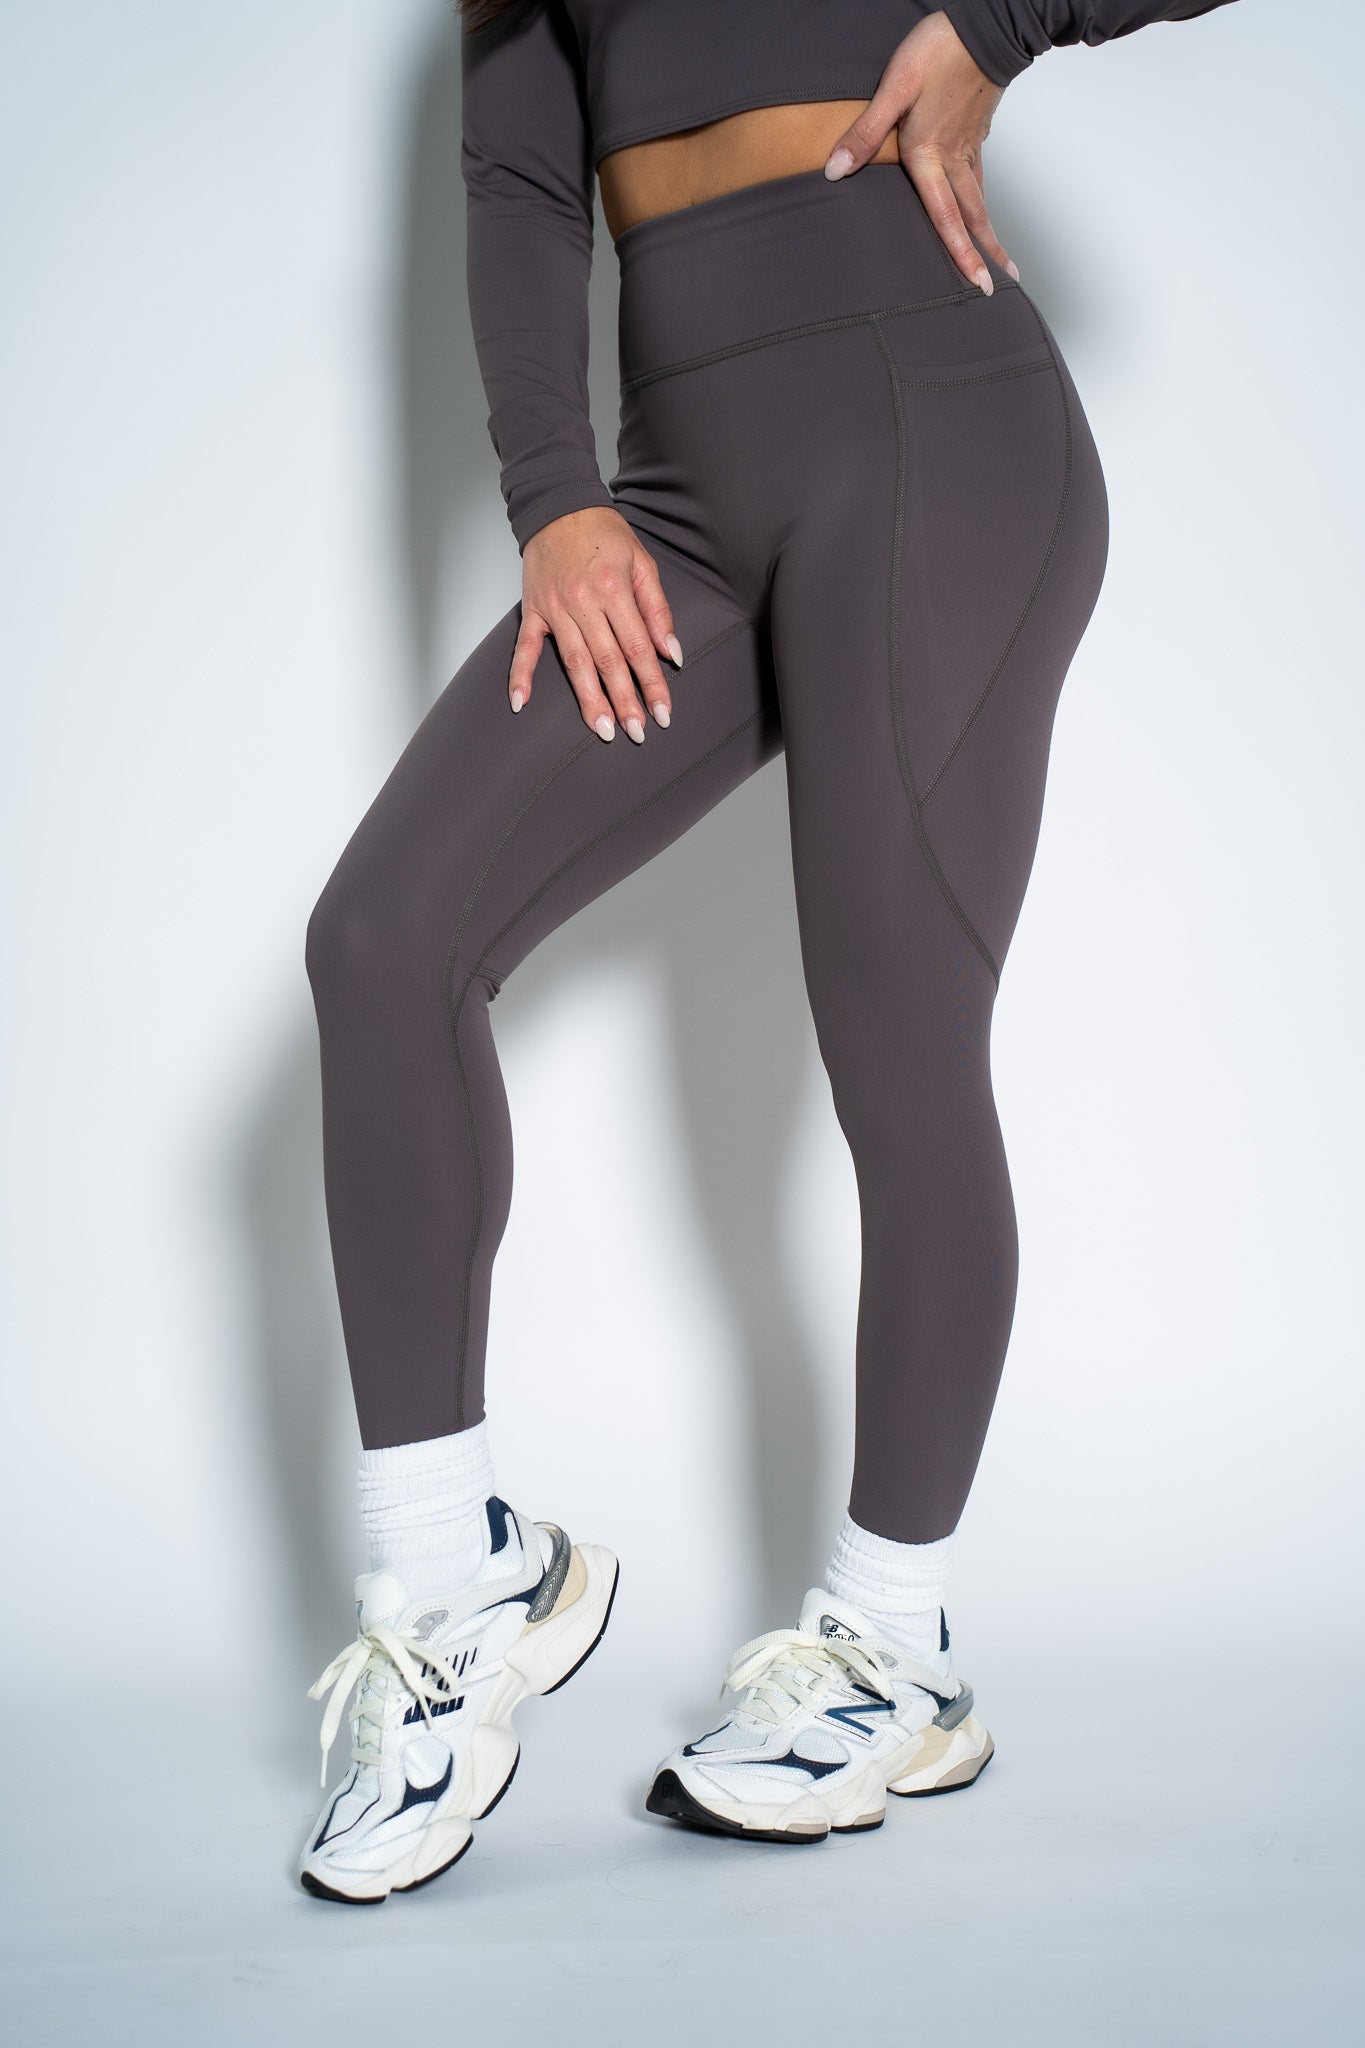 Stylish High Waist Workout Leggings for Women